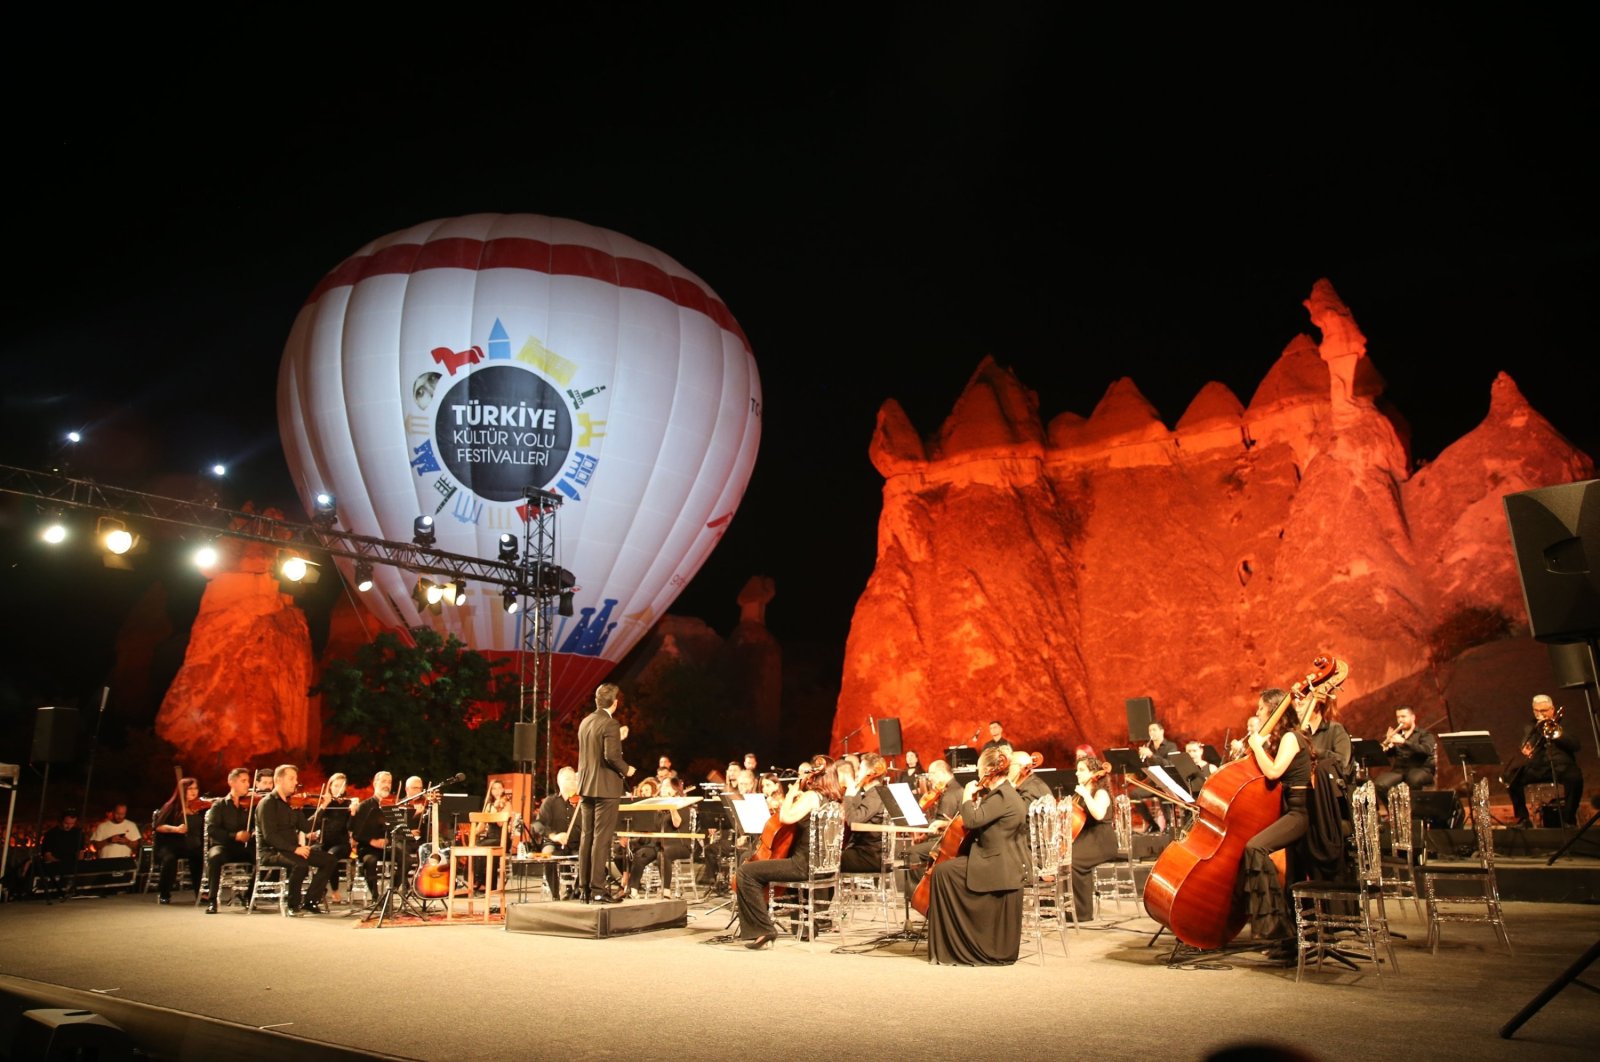 Türkiye's Culture Road Festivals join European Festival Association | Daily Sabah - Daily Sabah